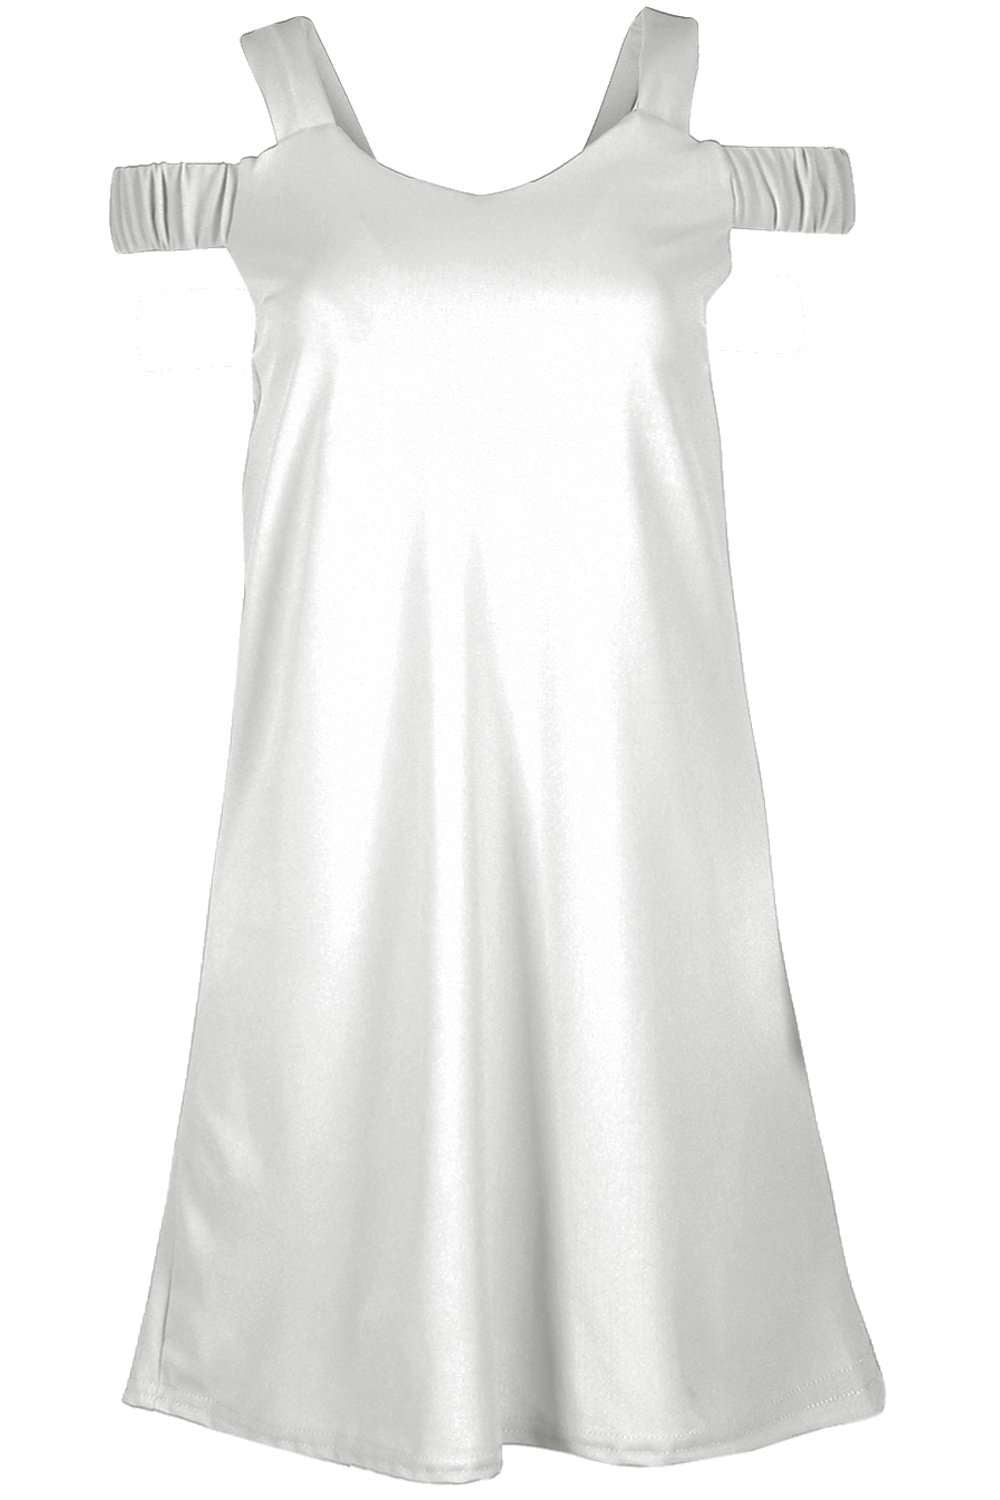 Macie Strappy Off Shoulder Mini Dress - bejealous-com